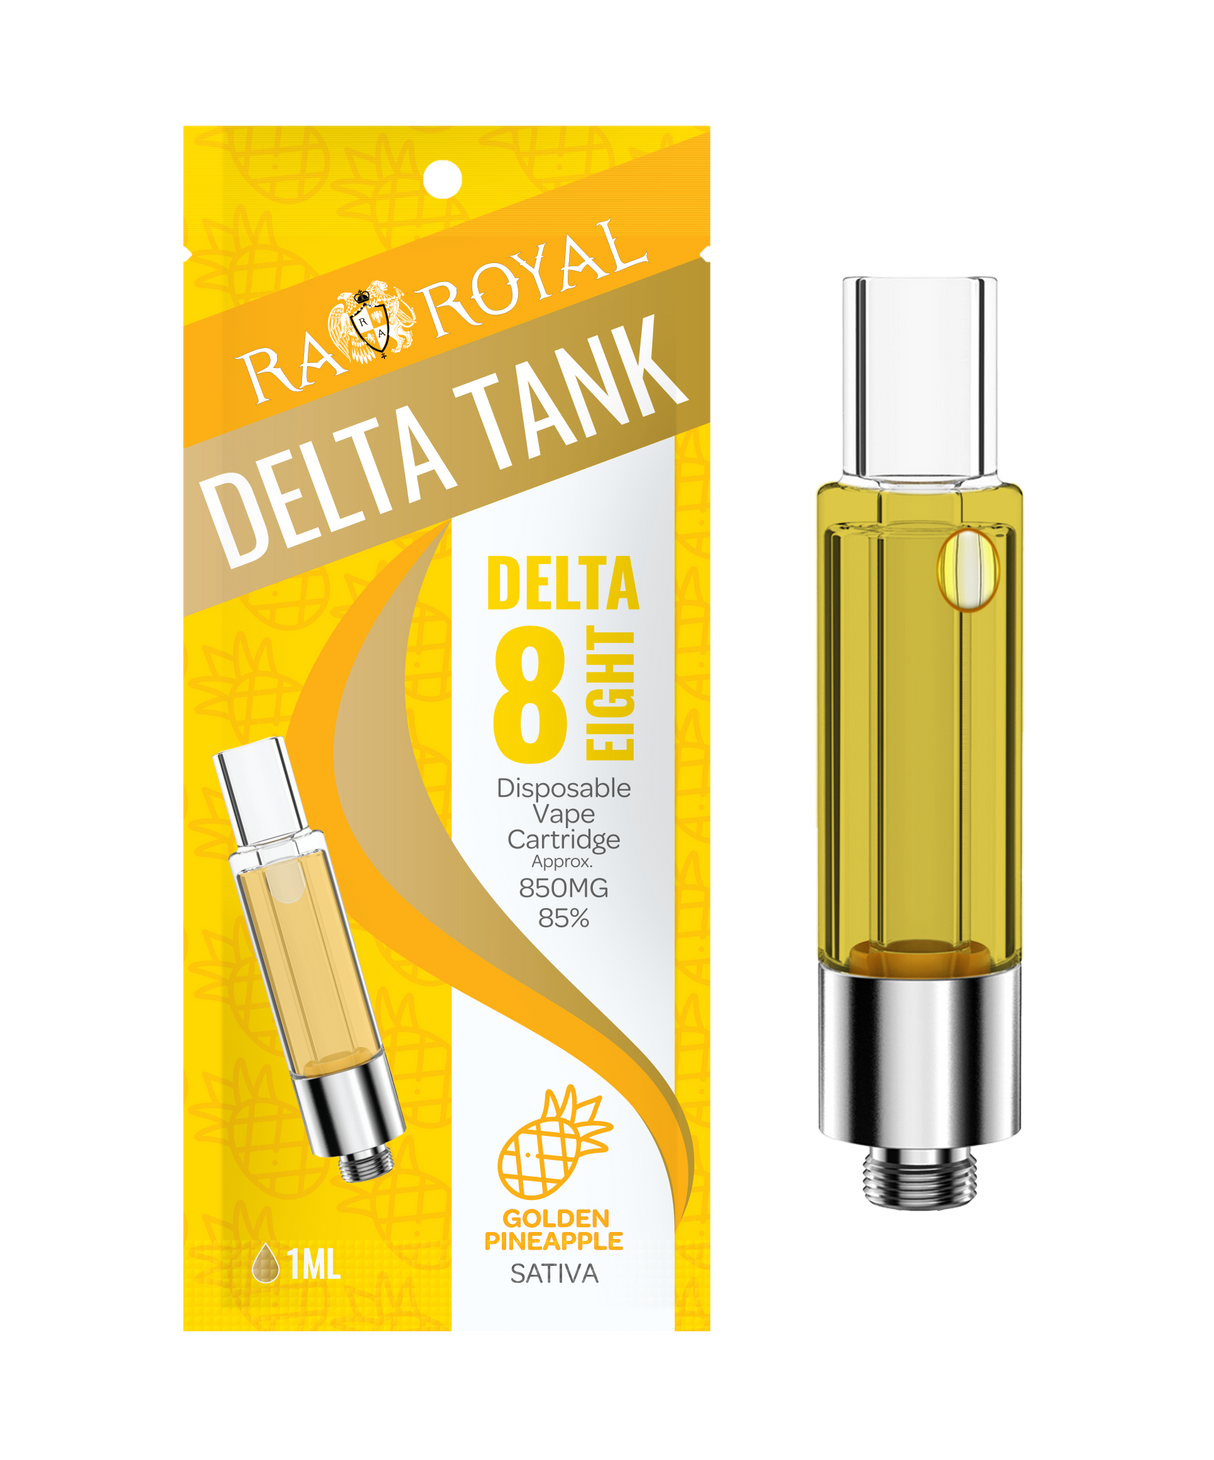 R.A. Royal Delta-8 Vape Tank: Golden Pineapple Sativa